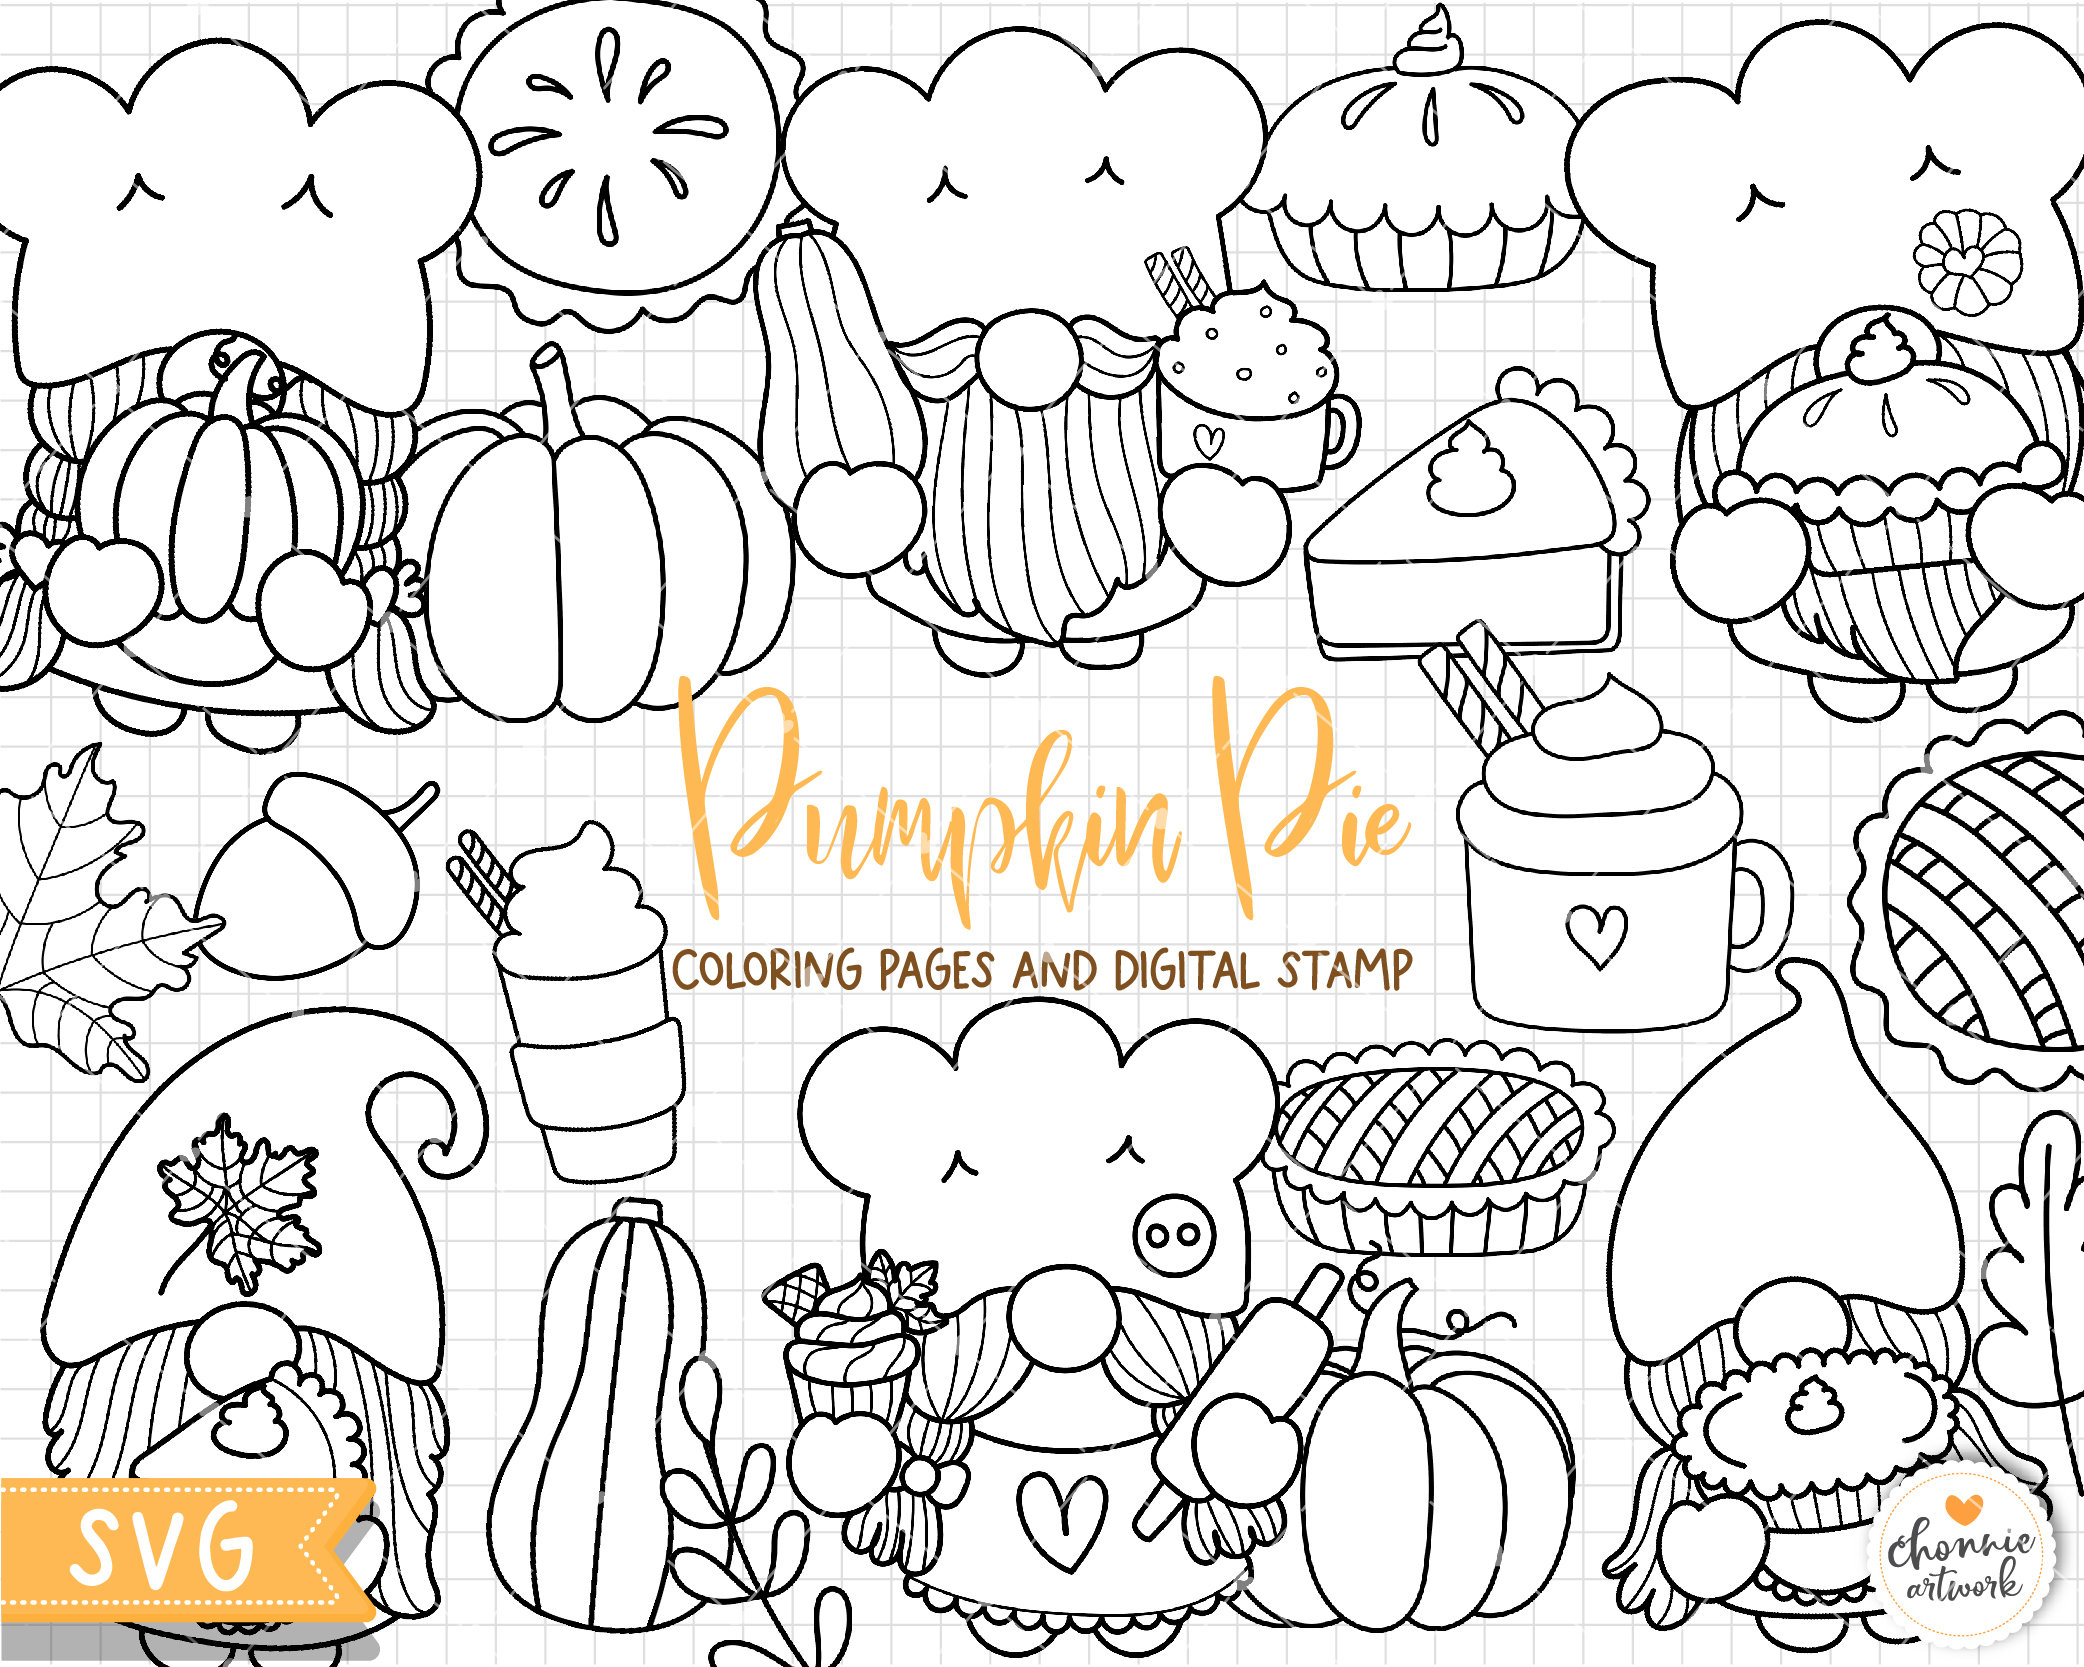 Pumpkin pie coloring